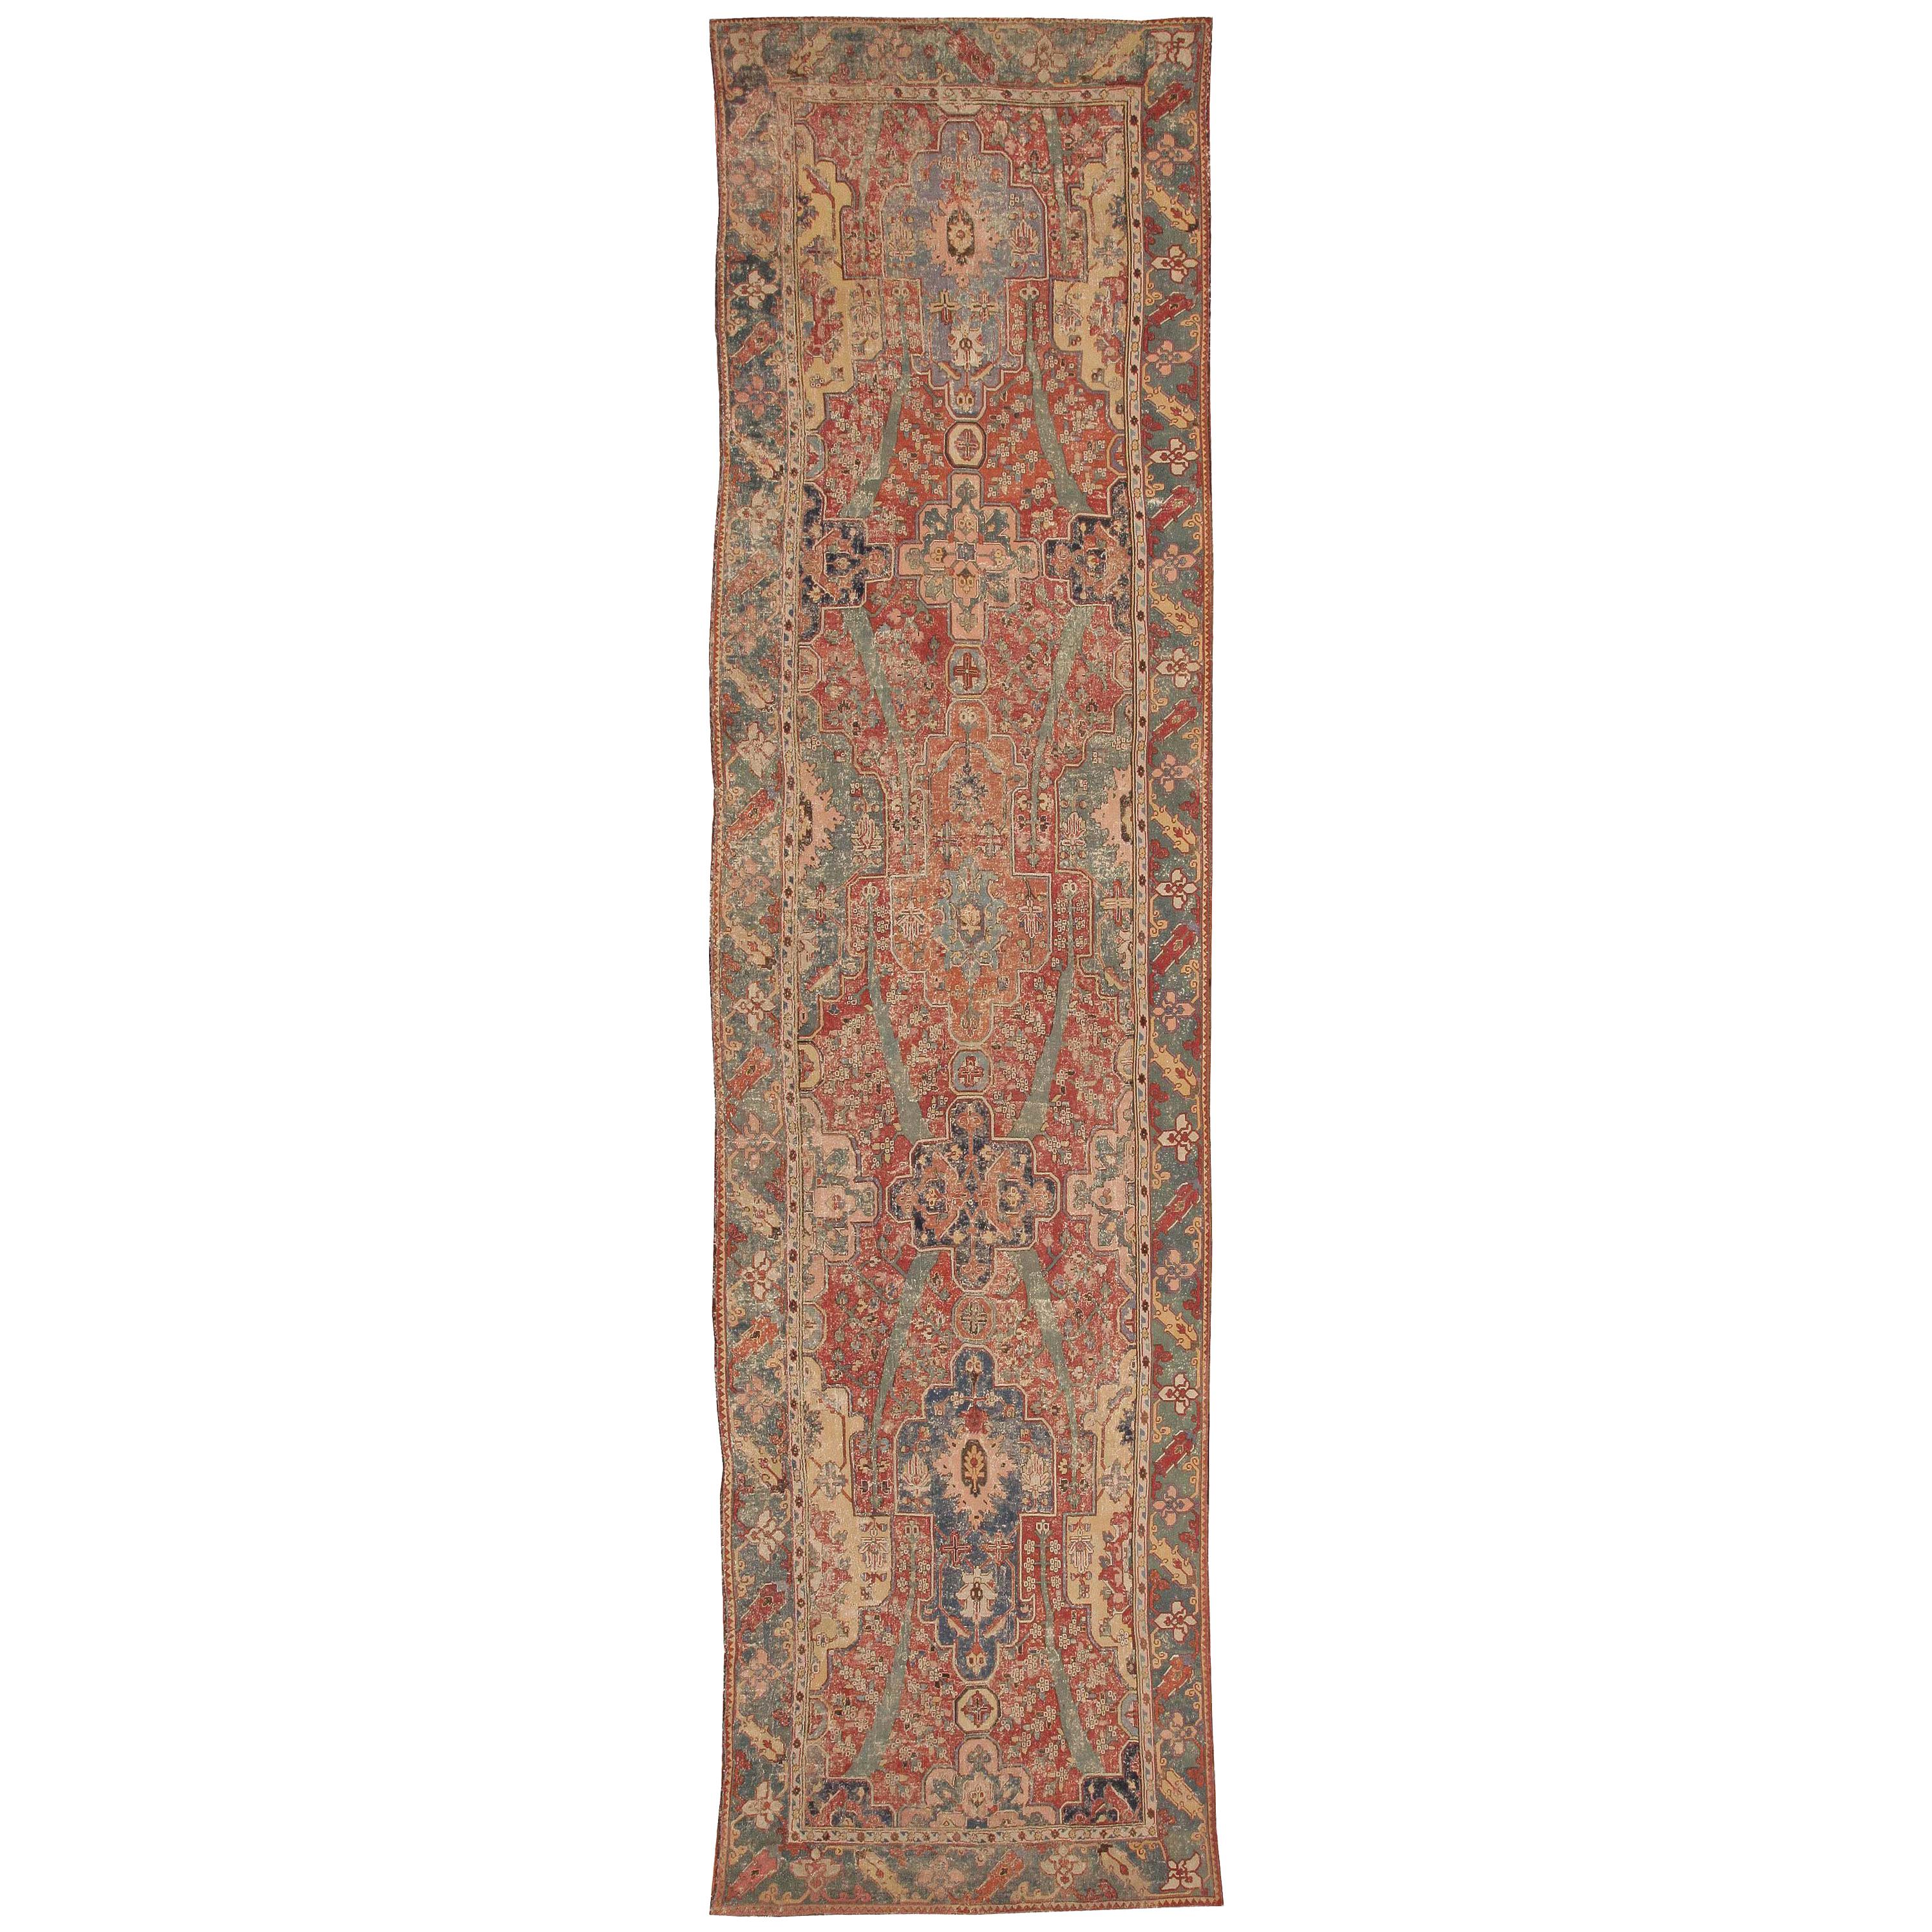 Nazmiyal  17th Century Gallery Size Khorassan Persian Rug. Size: 5' 4" x 20' 4" 